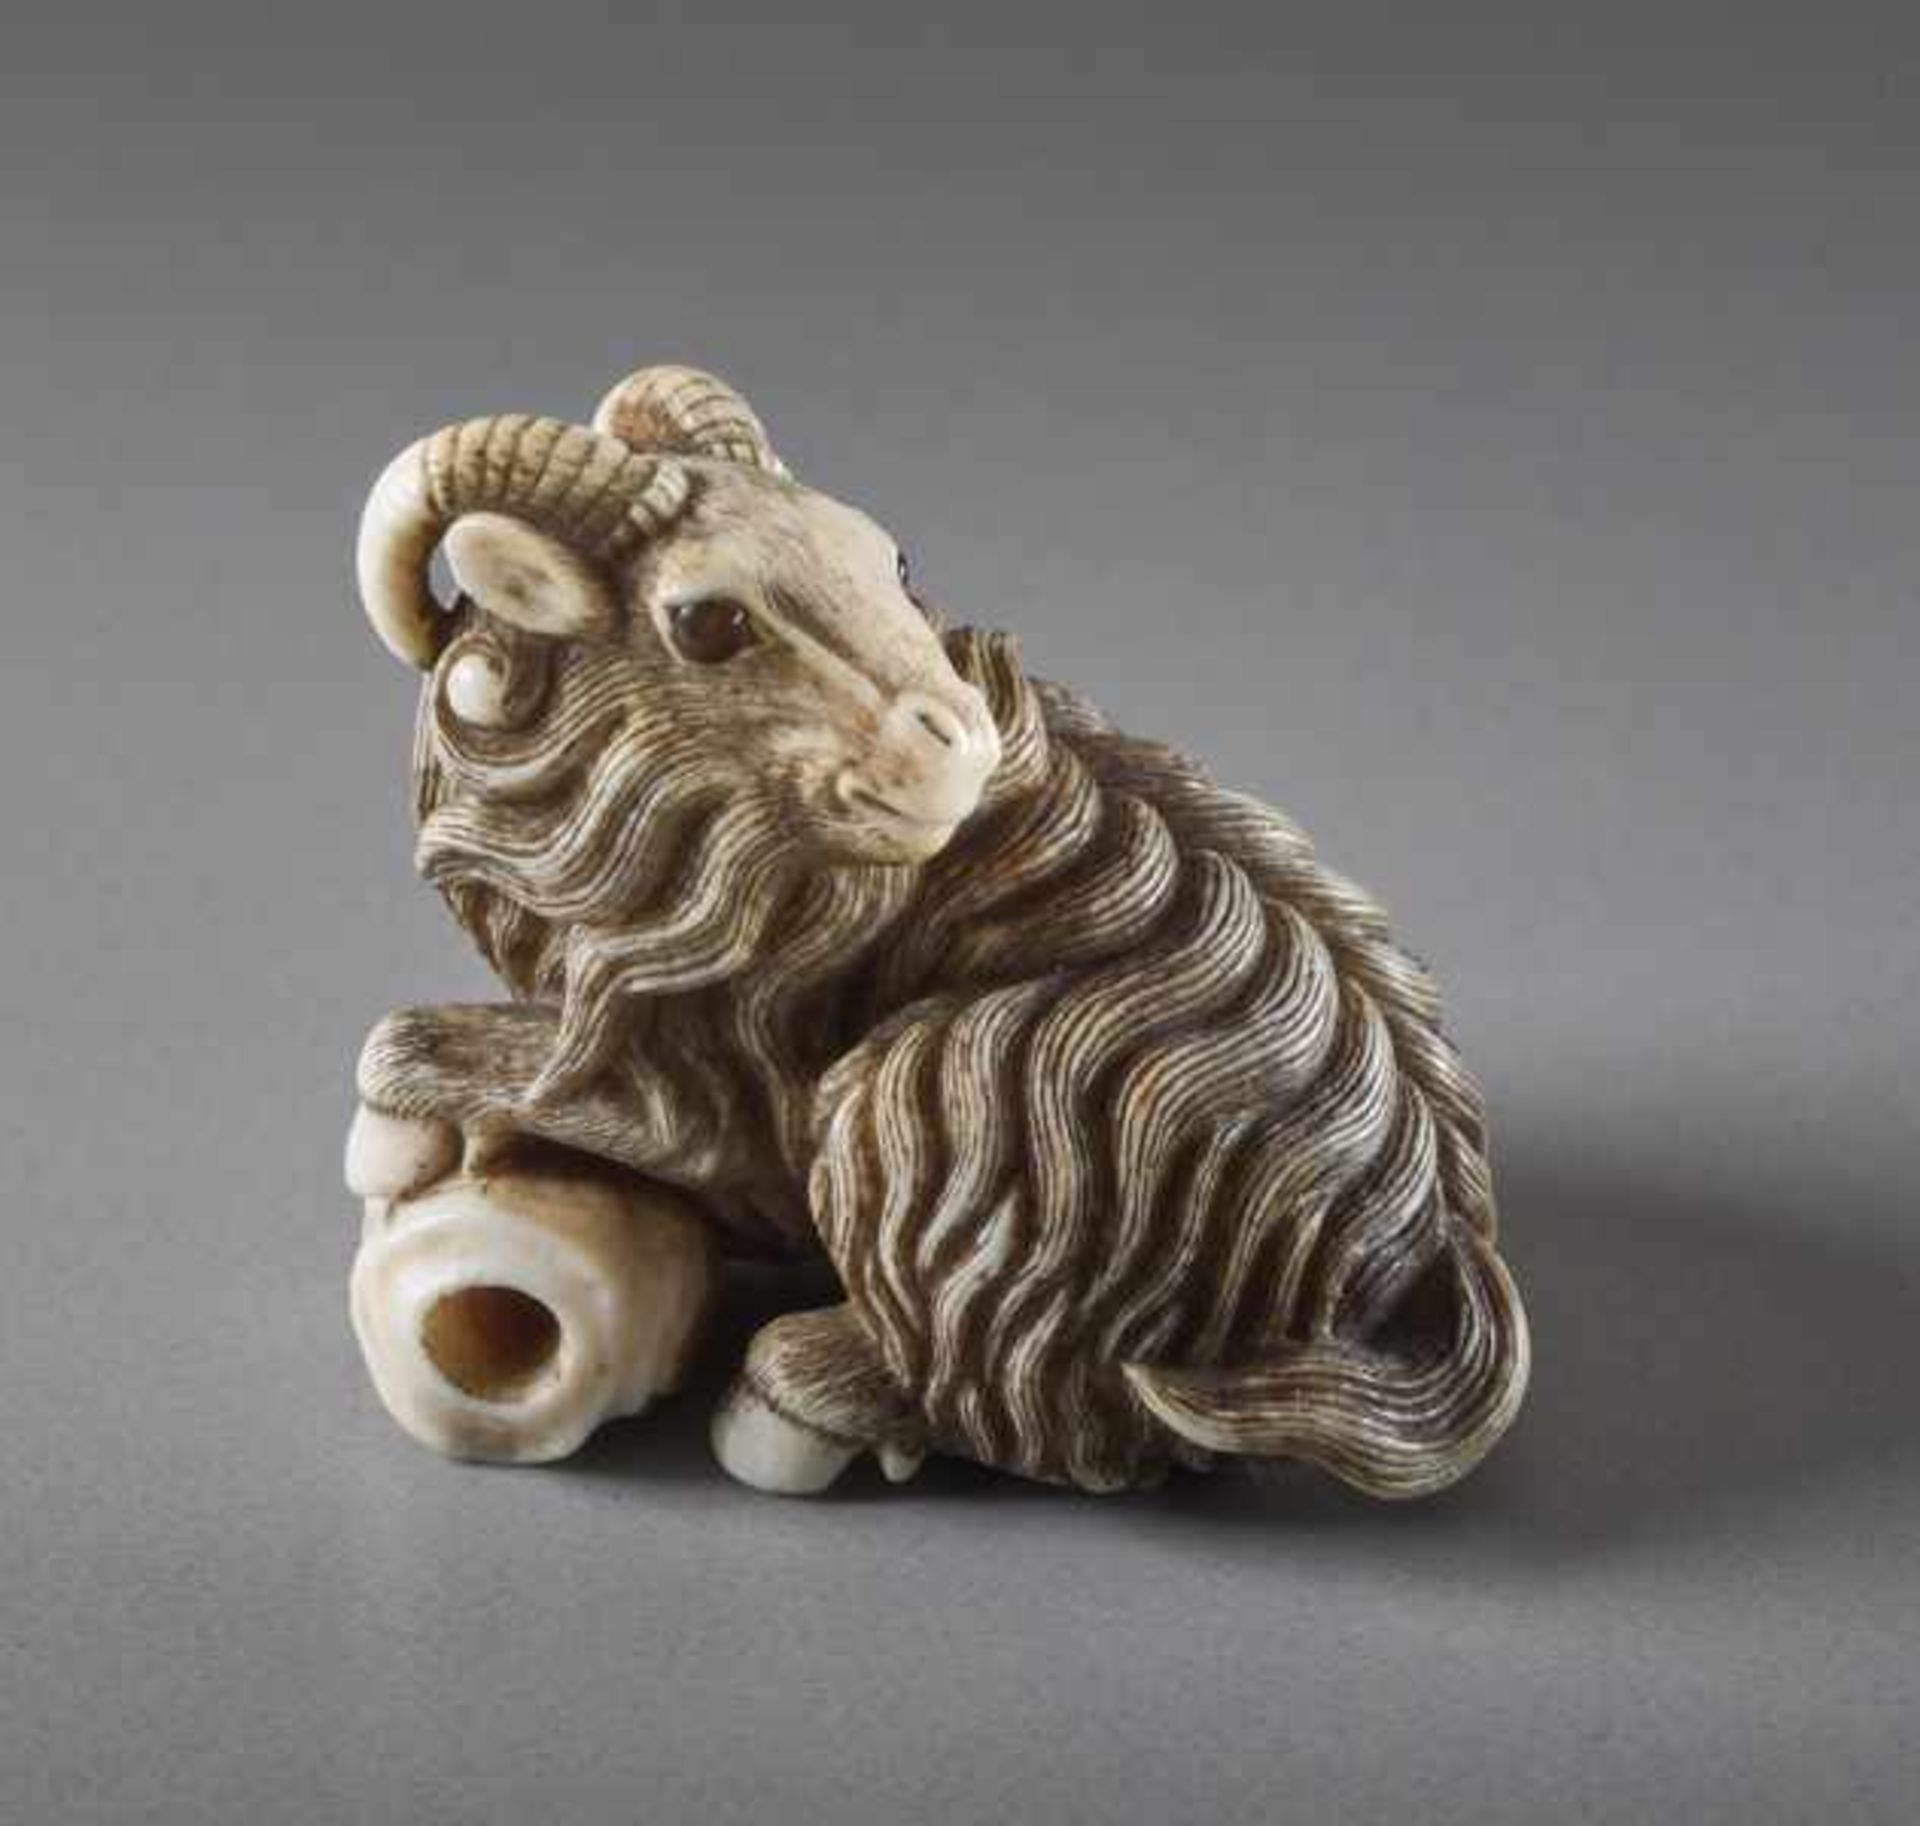 AN IVORY NETSUKE OF A GOAT Ivory netsuke. Japan, 18th centuryA masterfully executed netsuke of a